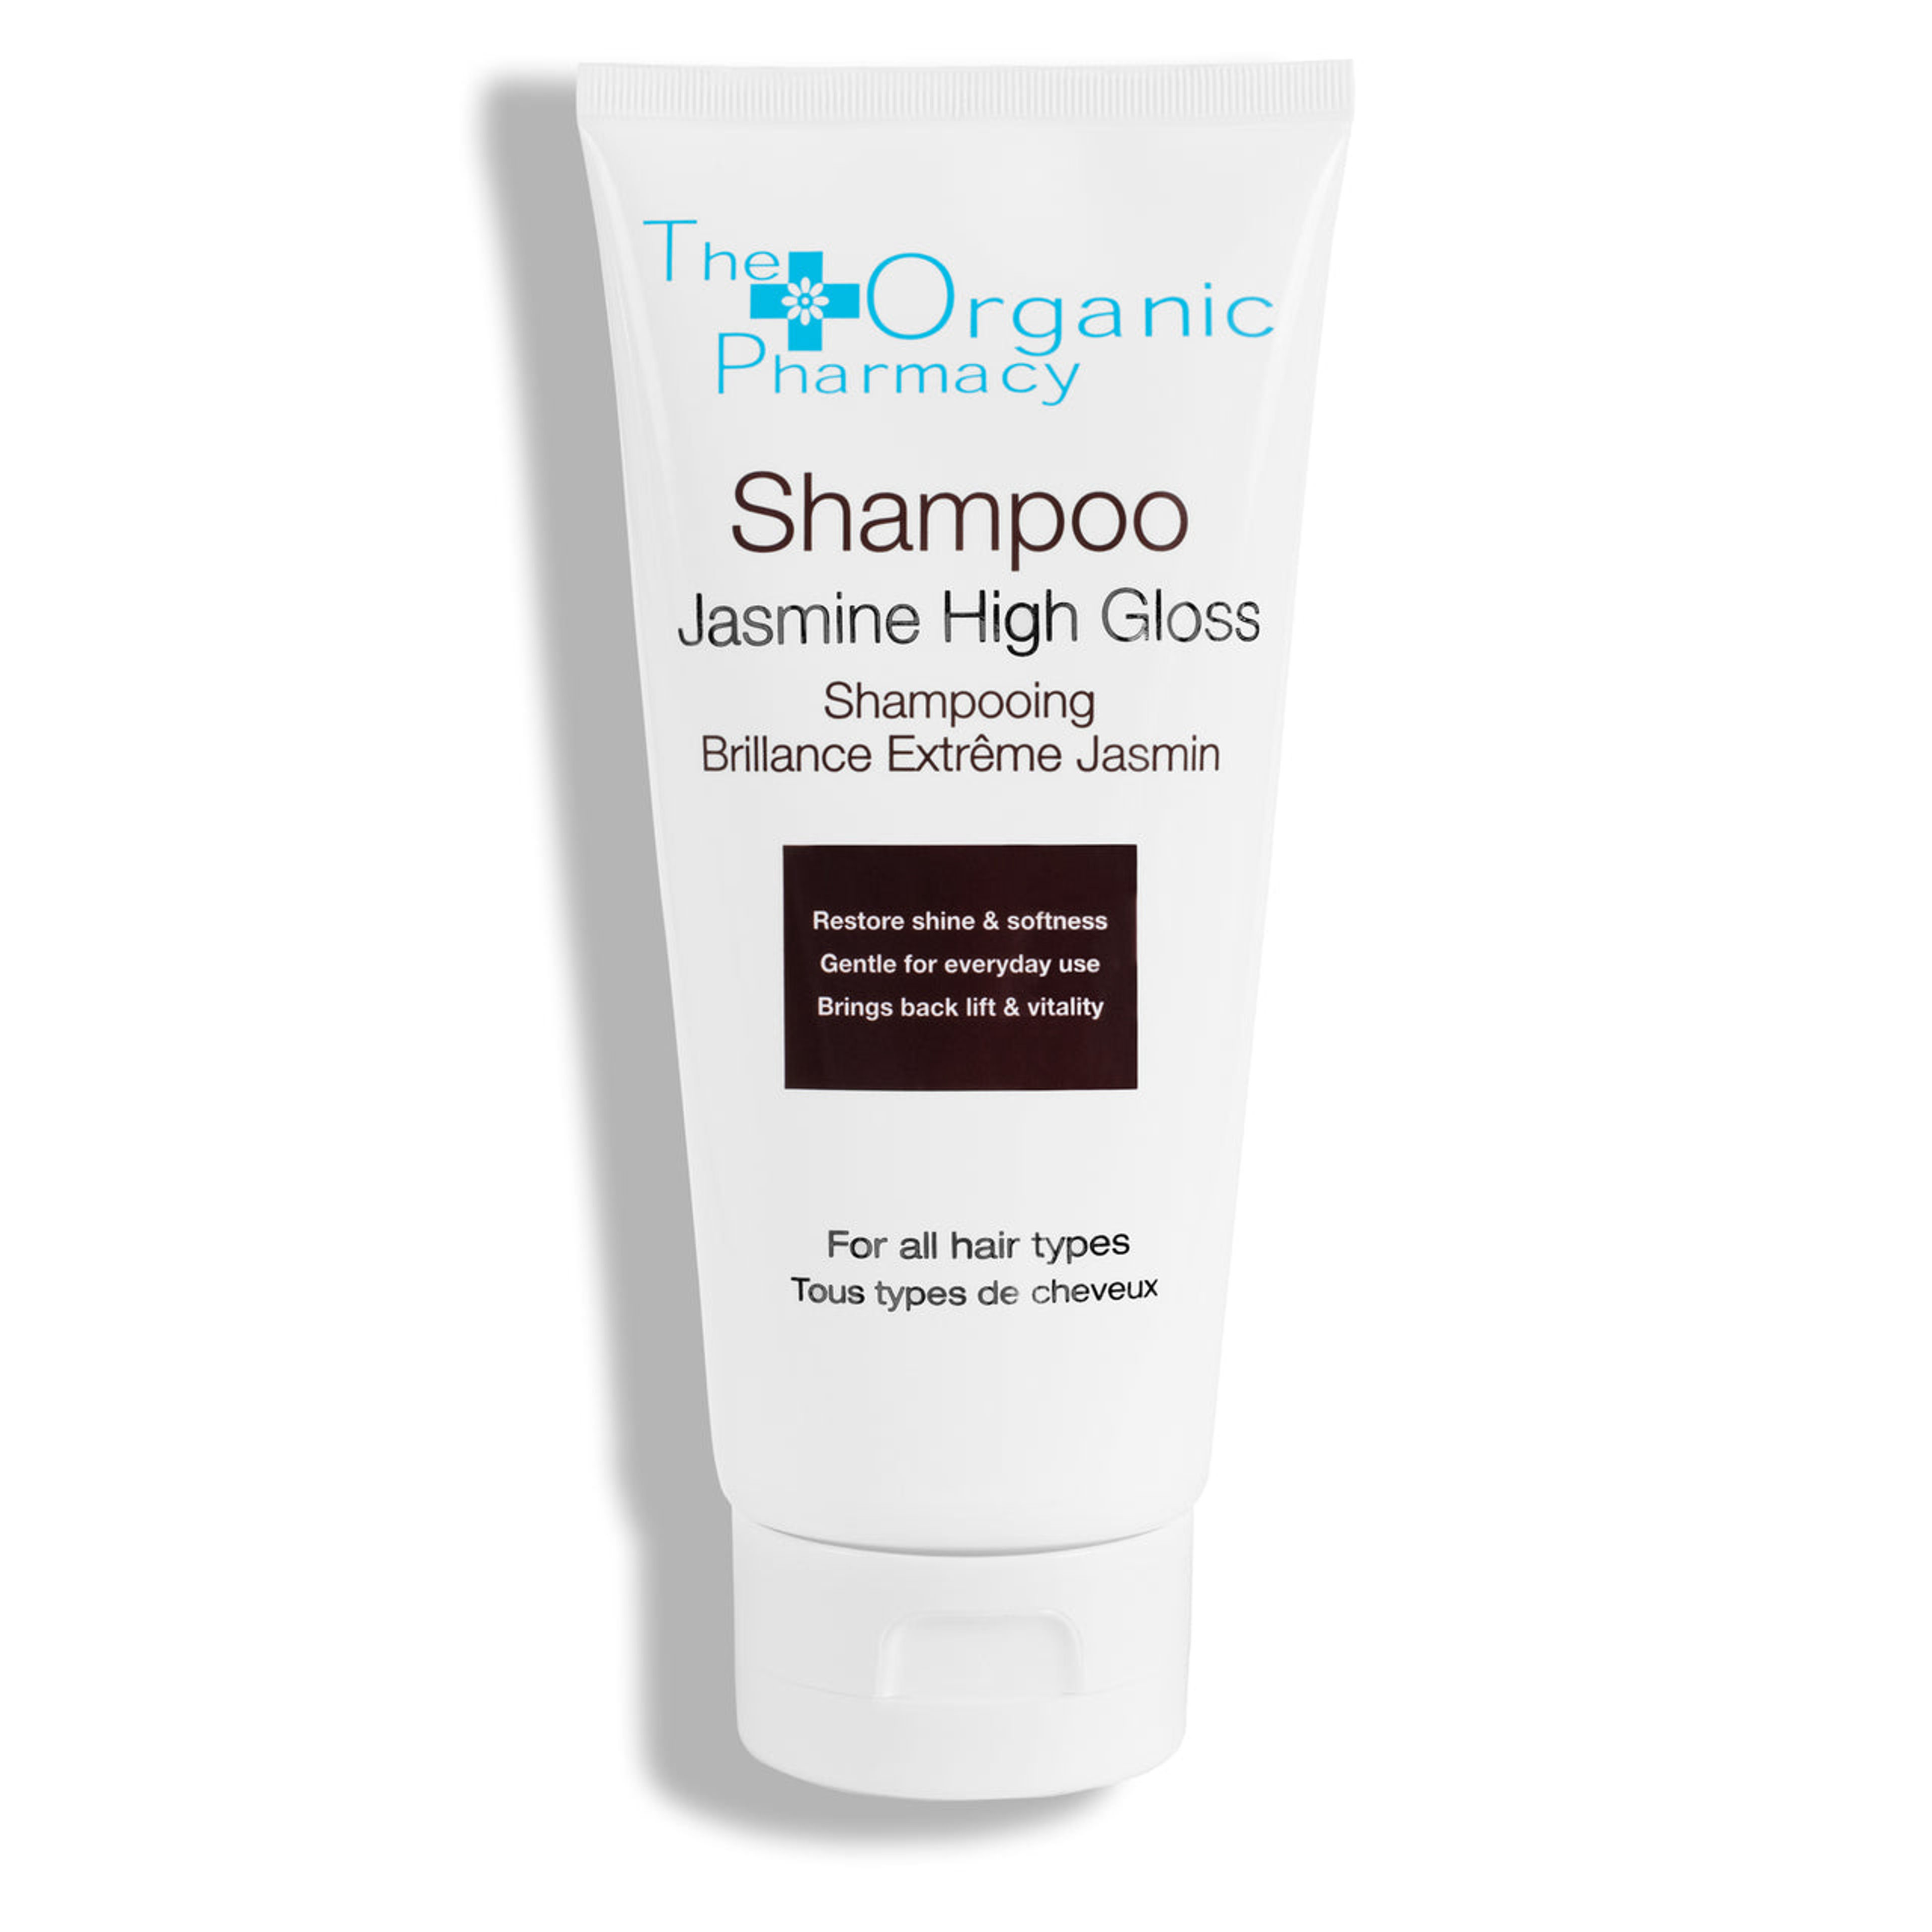 Jasmine High Gloss Shampoo